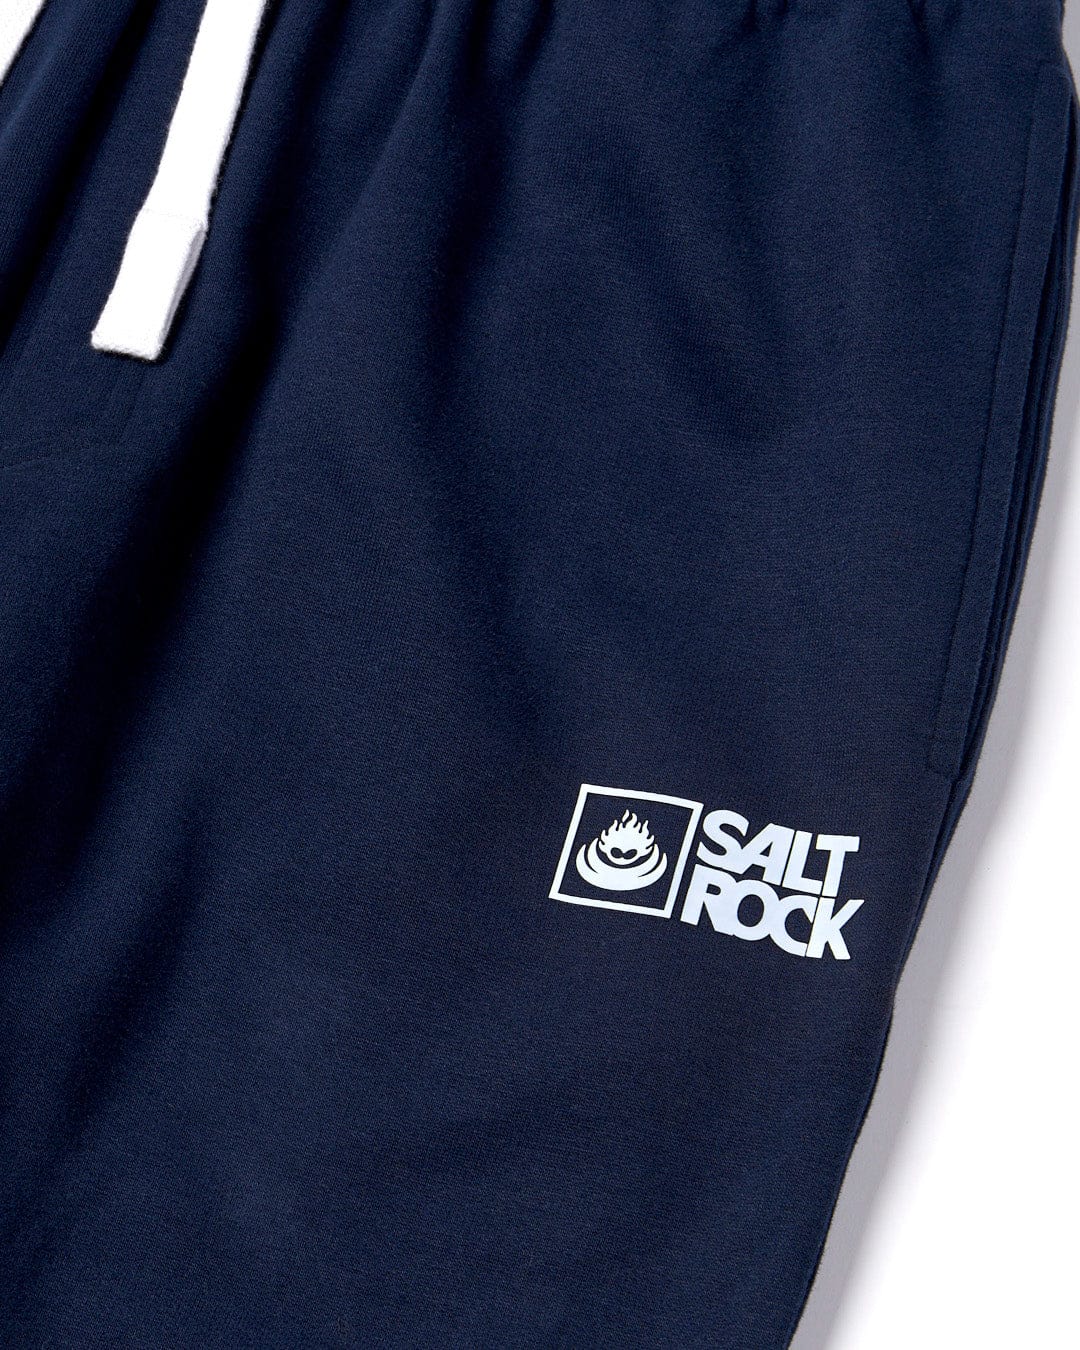 Close-up of a Saltrock Original - Mens Joggers - Dark Blue material with a "Saltrock" logo.